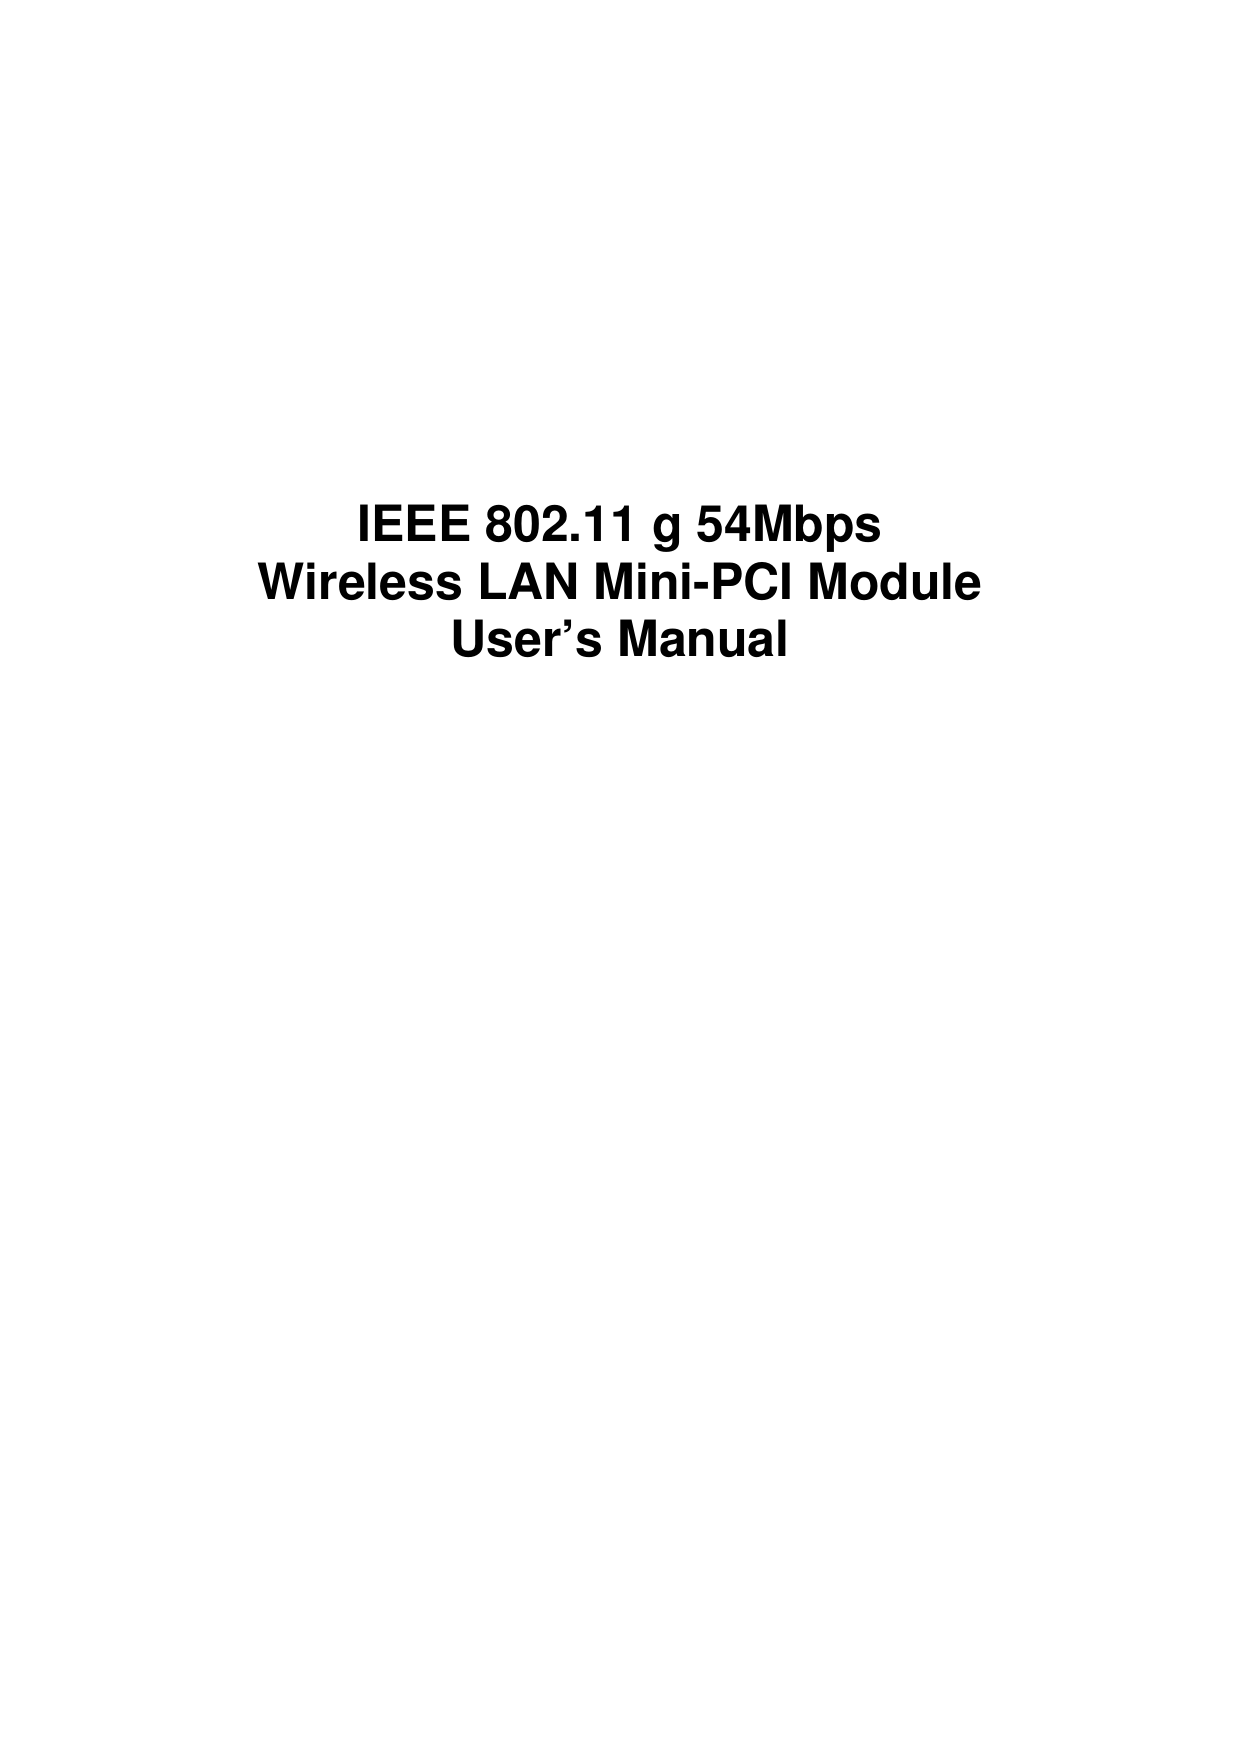       IEEE 802.11 g 54Mbps Wireless LAN Mini-PCI Module User’s Manual 